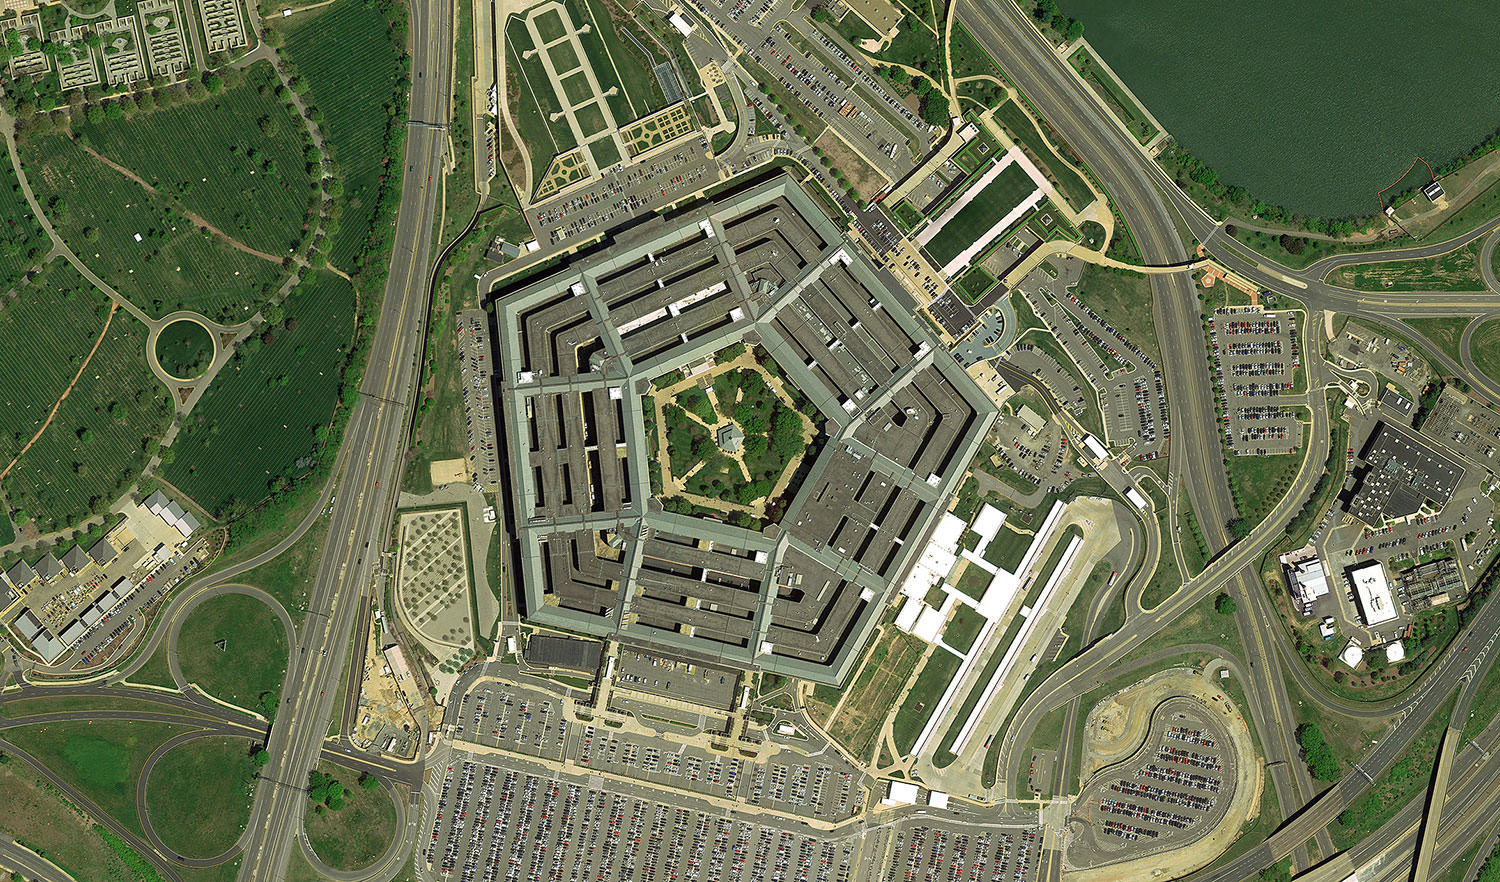 Pentagon in Washington building looking down aerial view from above, Bird’s eye view Pentagon, Washington, USA